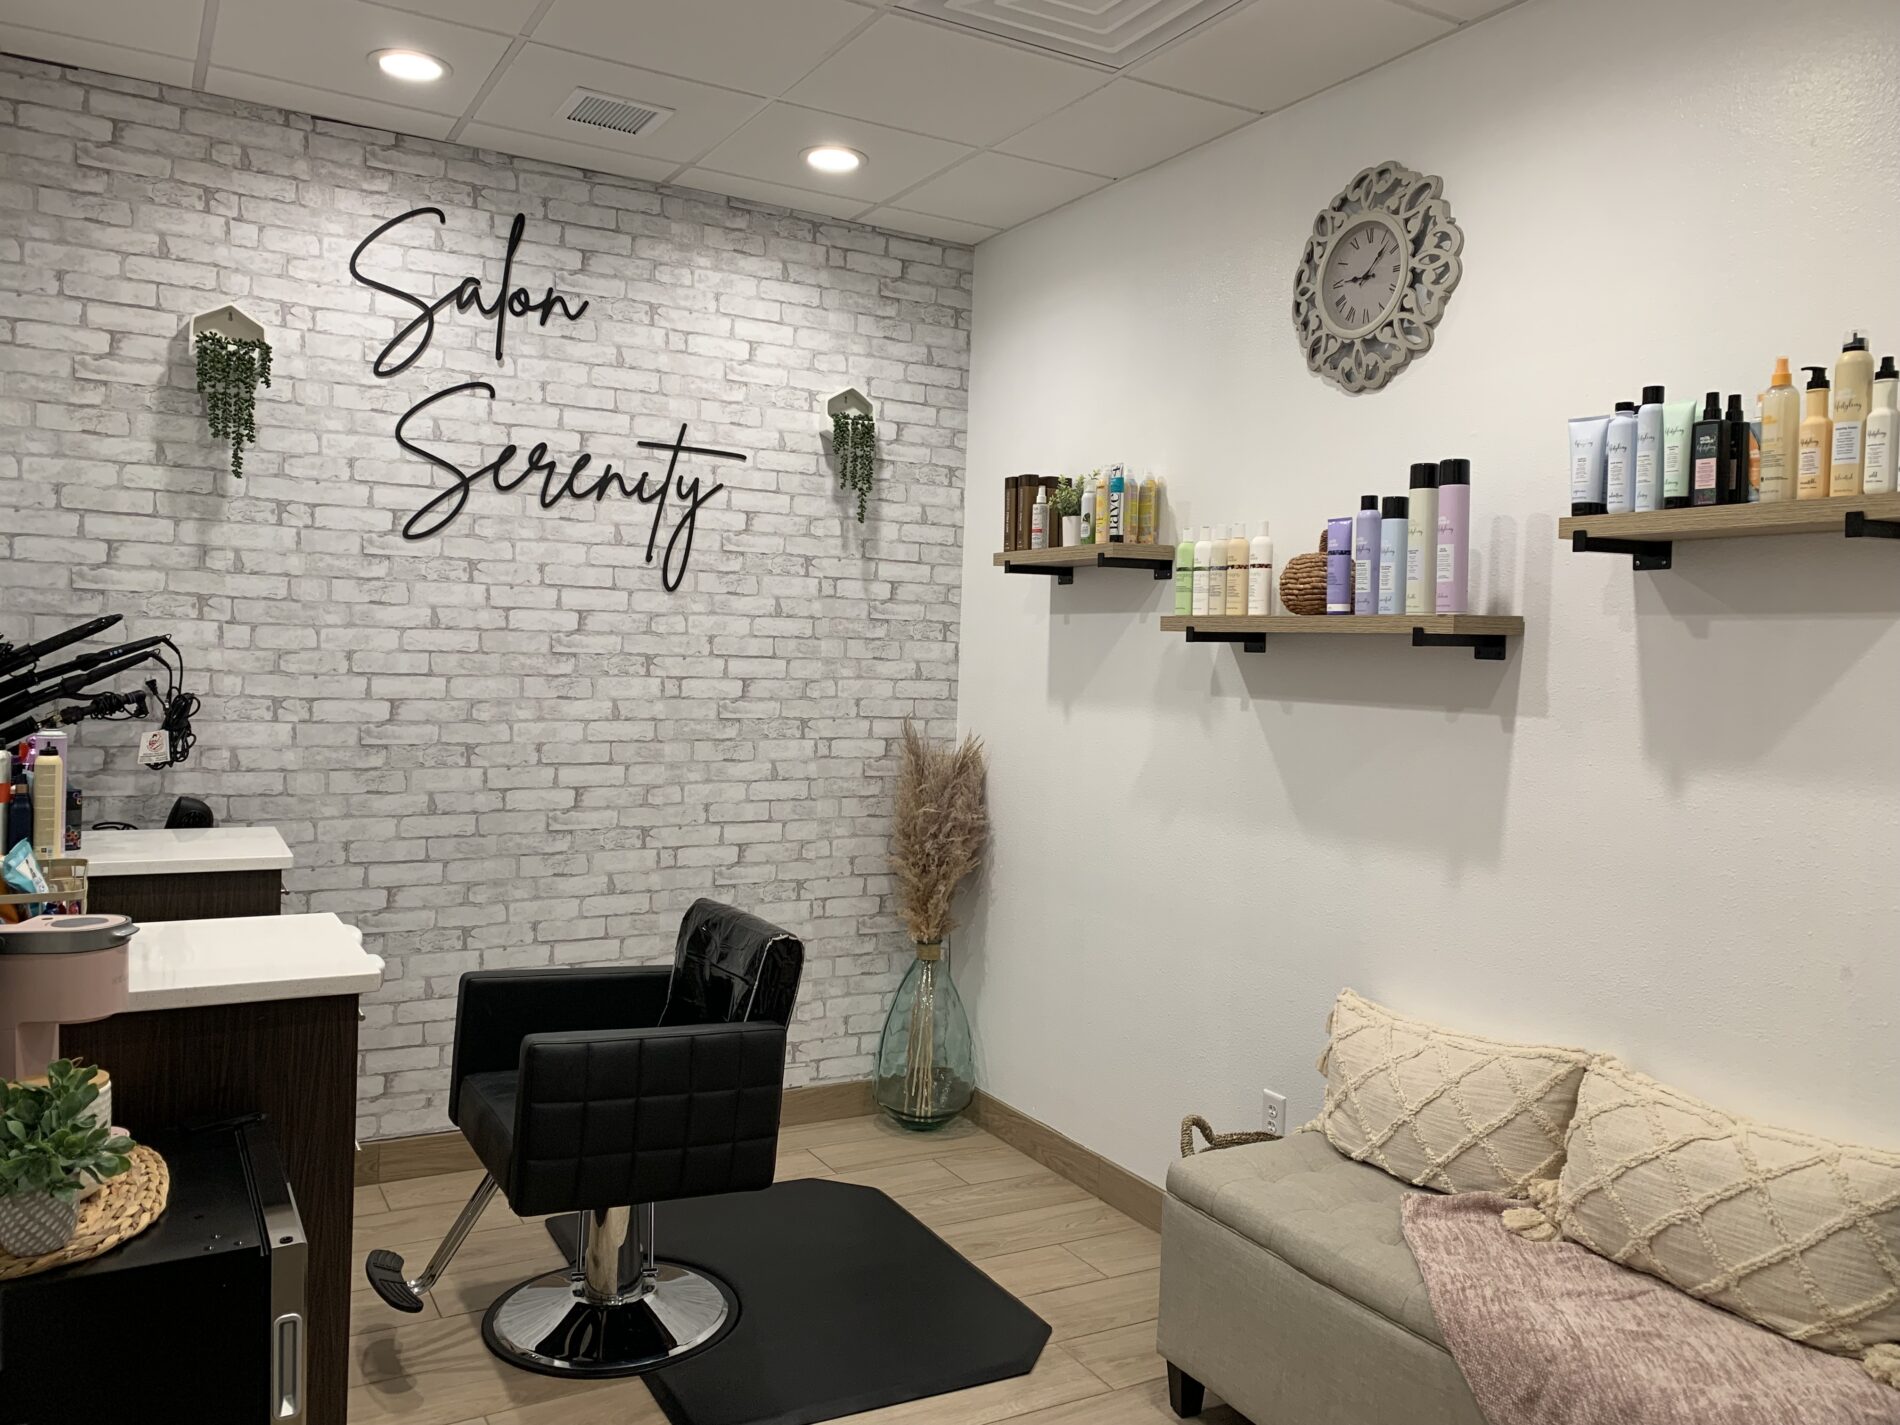 Suite 107 – Salon Serenity